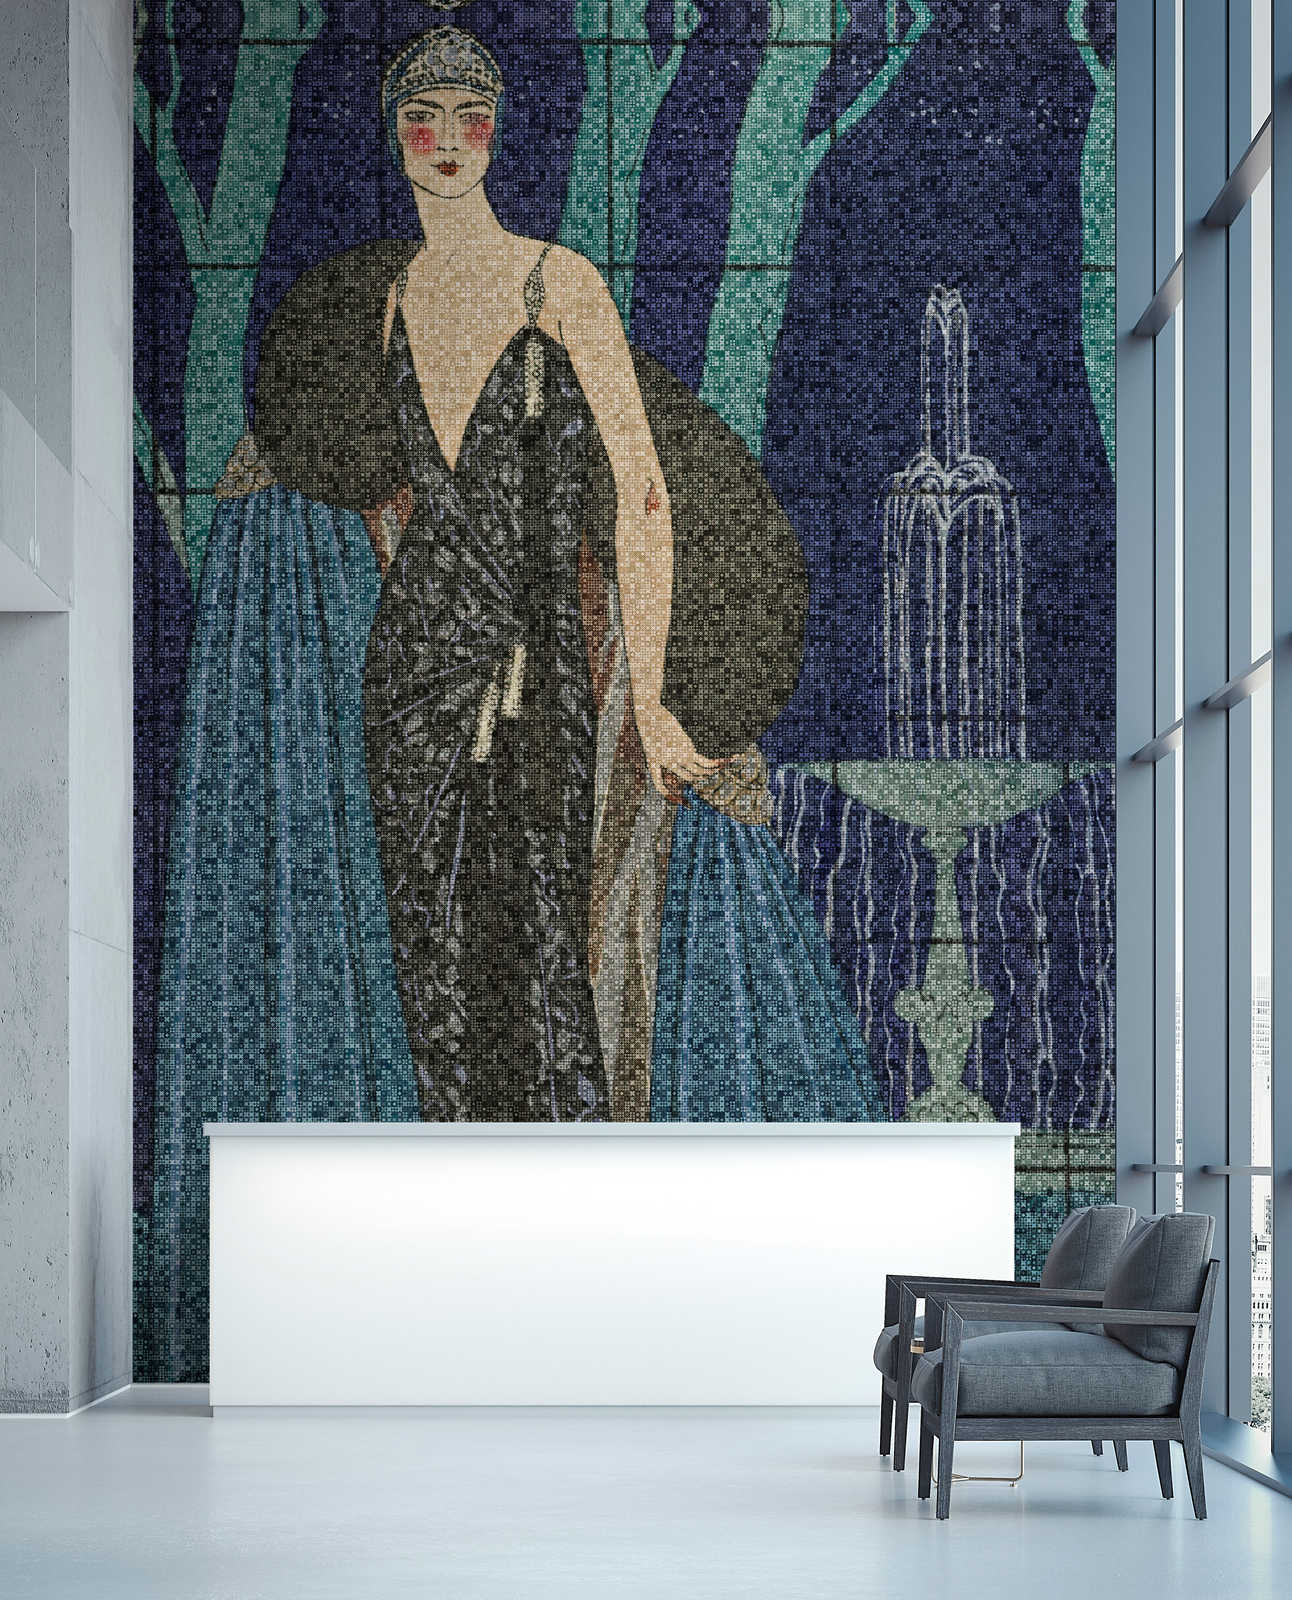             Scala 3 - Papel Pintado Art Deco motivo mujer elegante
        